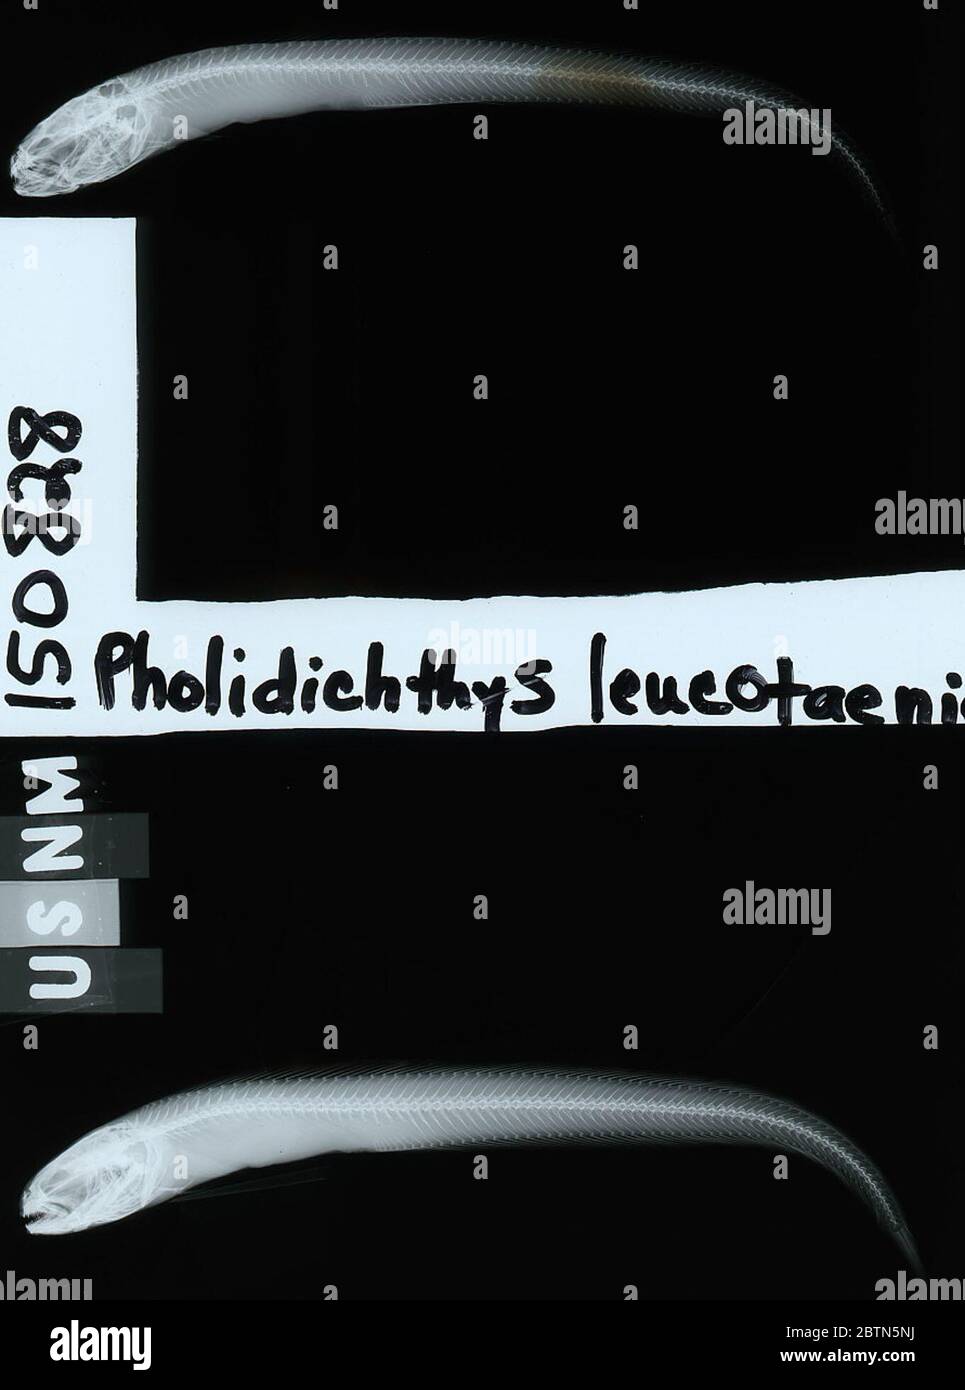 Pholidichthys leucotaenia. 1 Feb 20161 Stock Photo